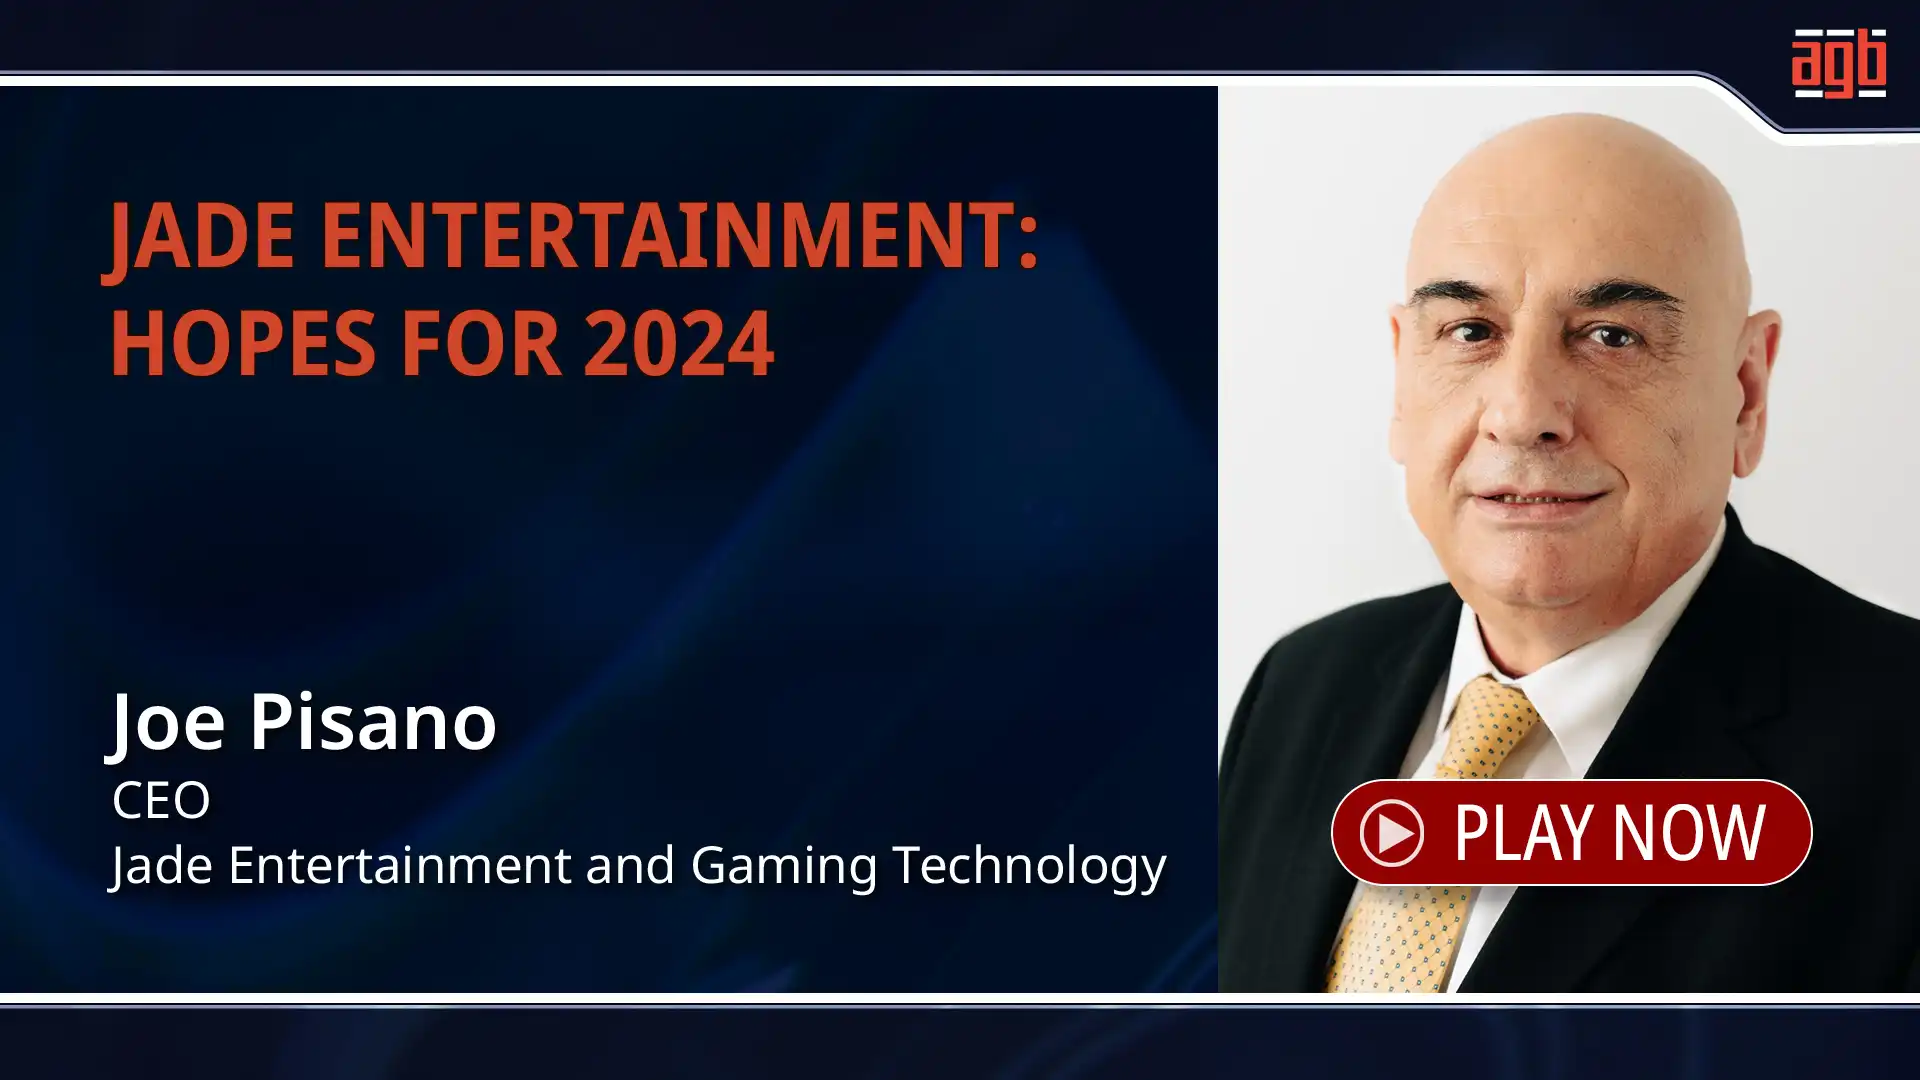 Joe Pisano, Jade Entertainment, hopes for 2024